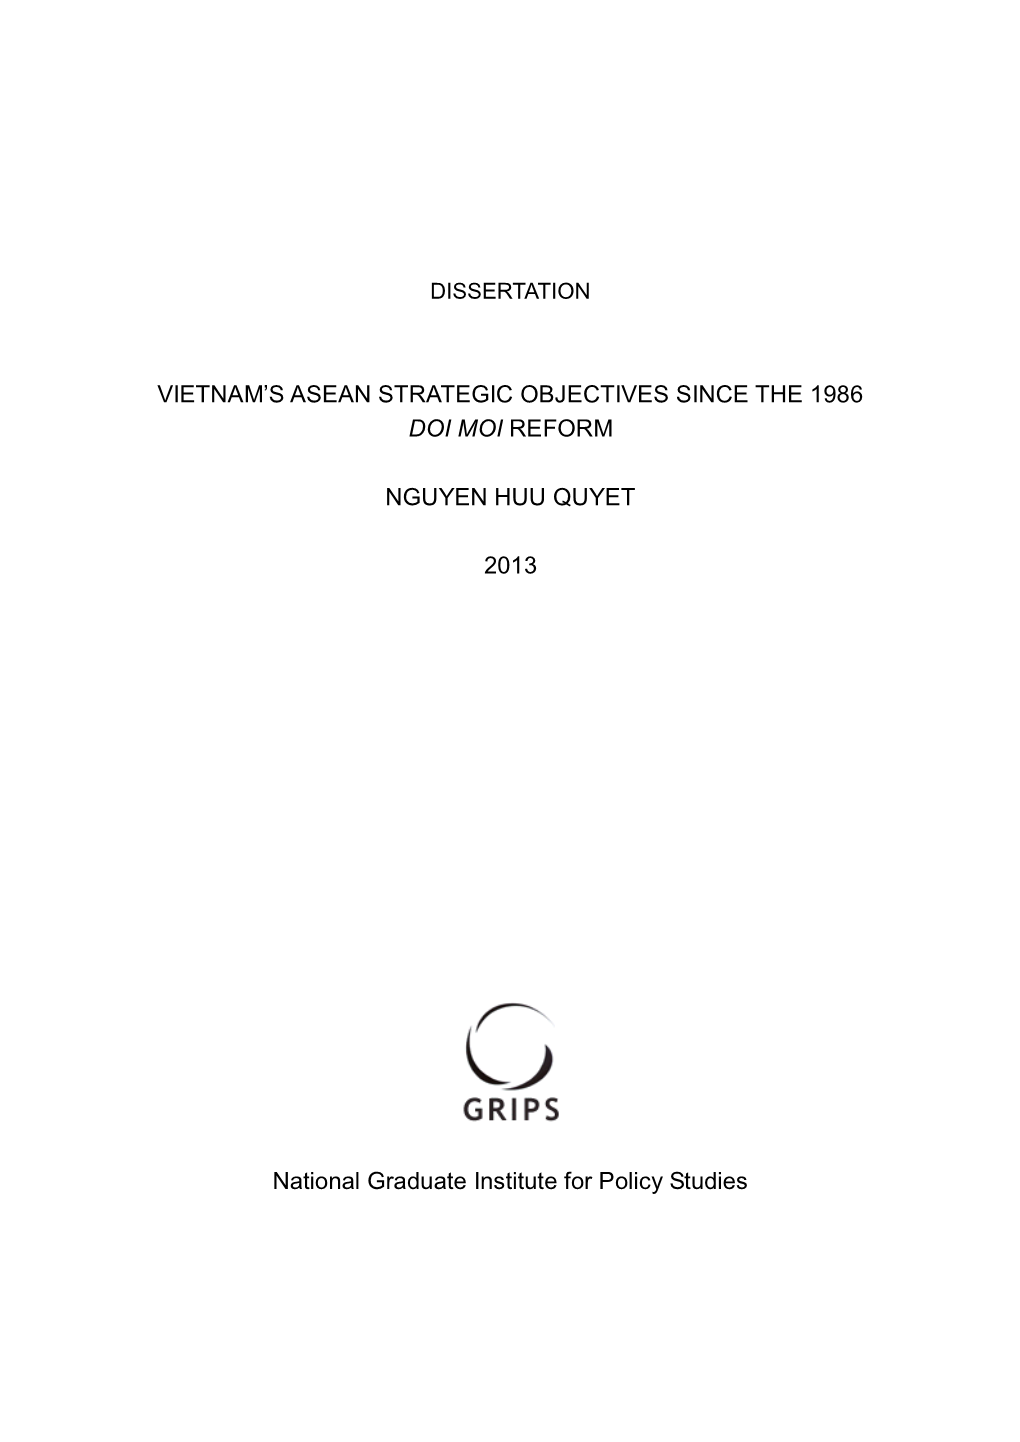 Vietnam's Asean Strategic Objectives Since the 1986